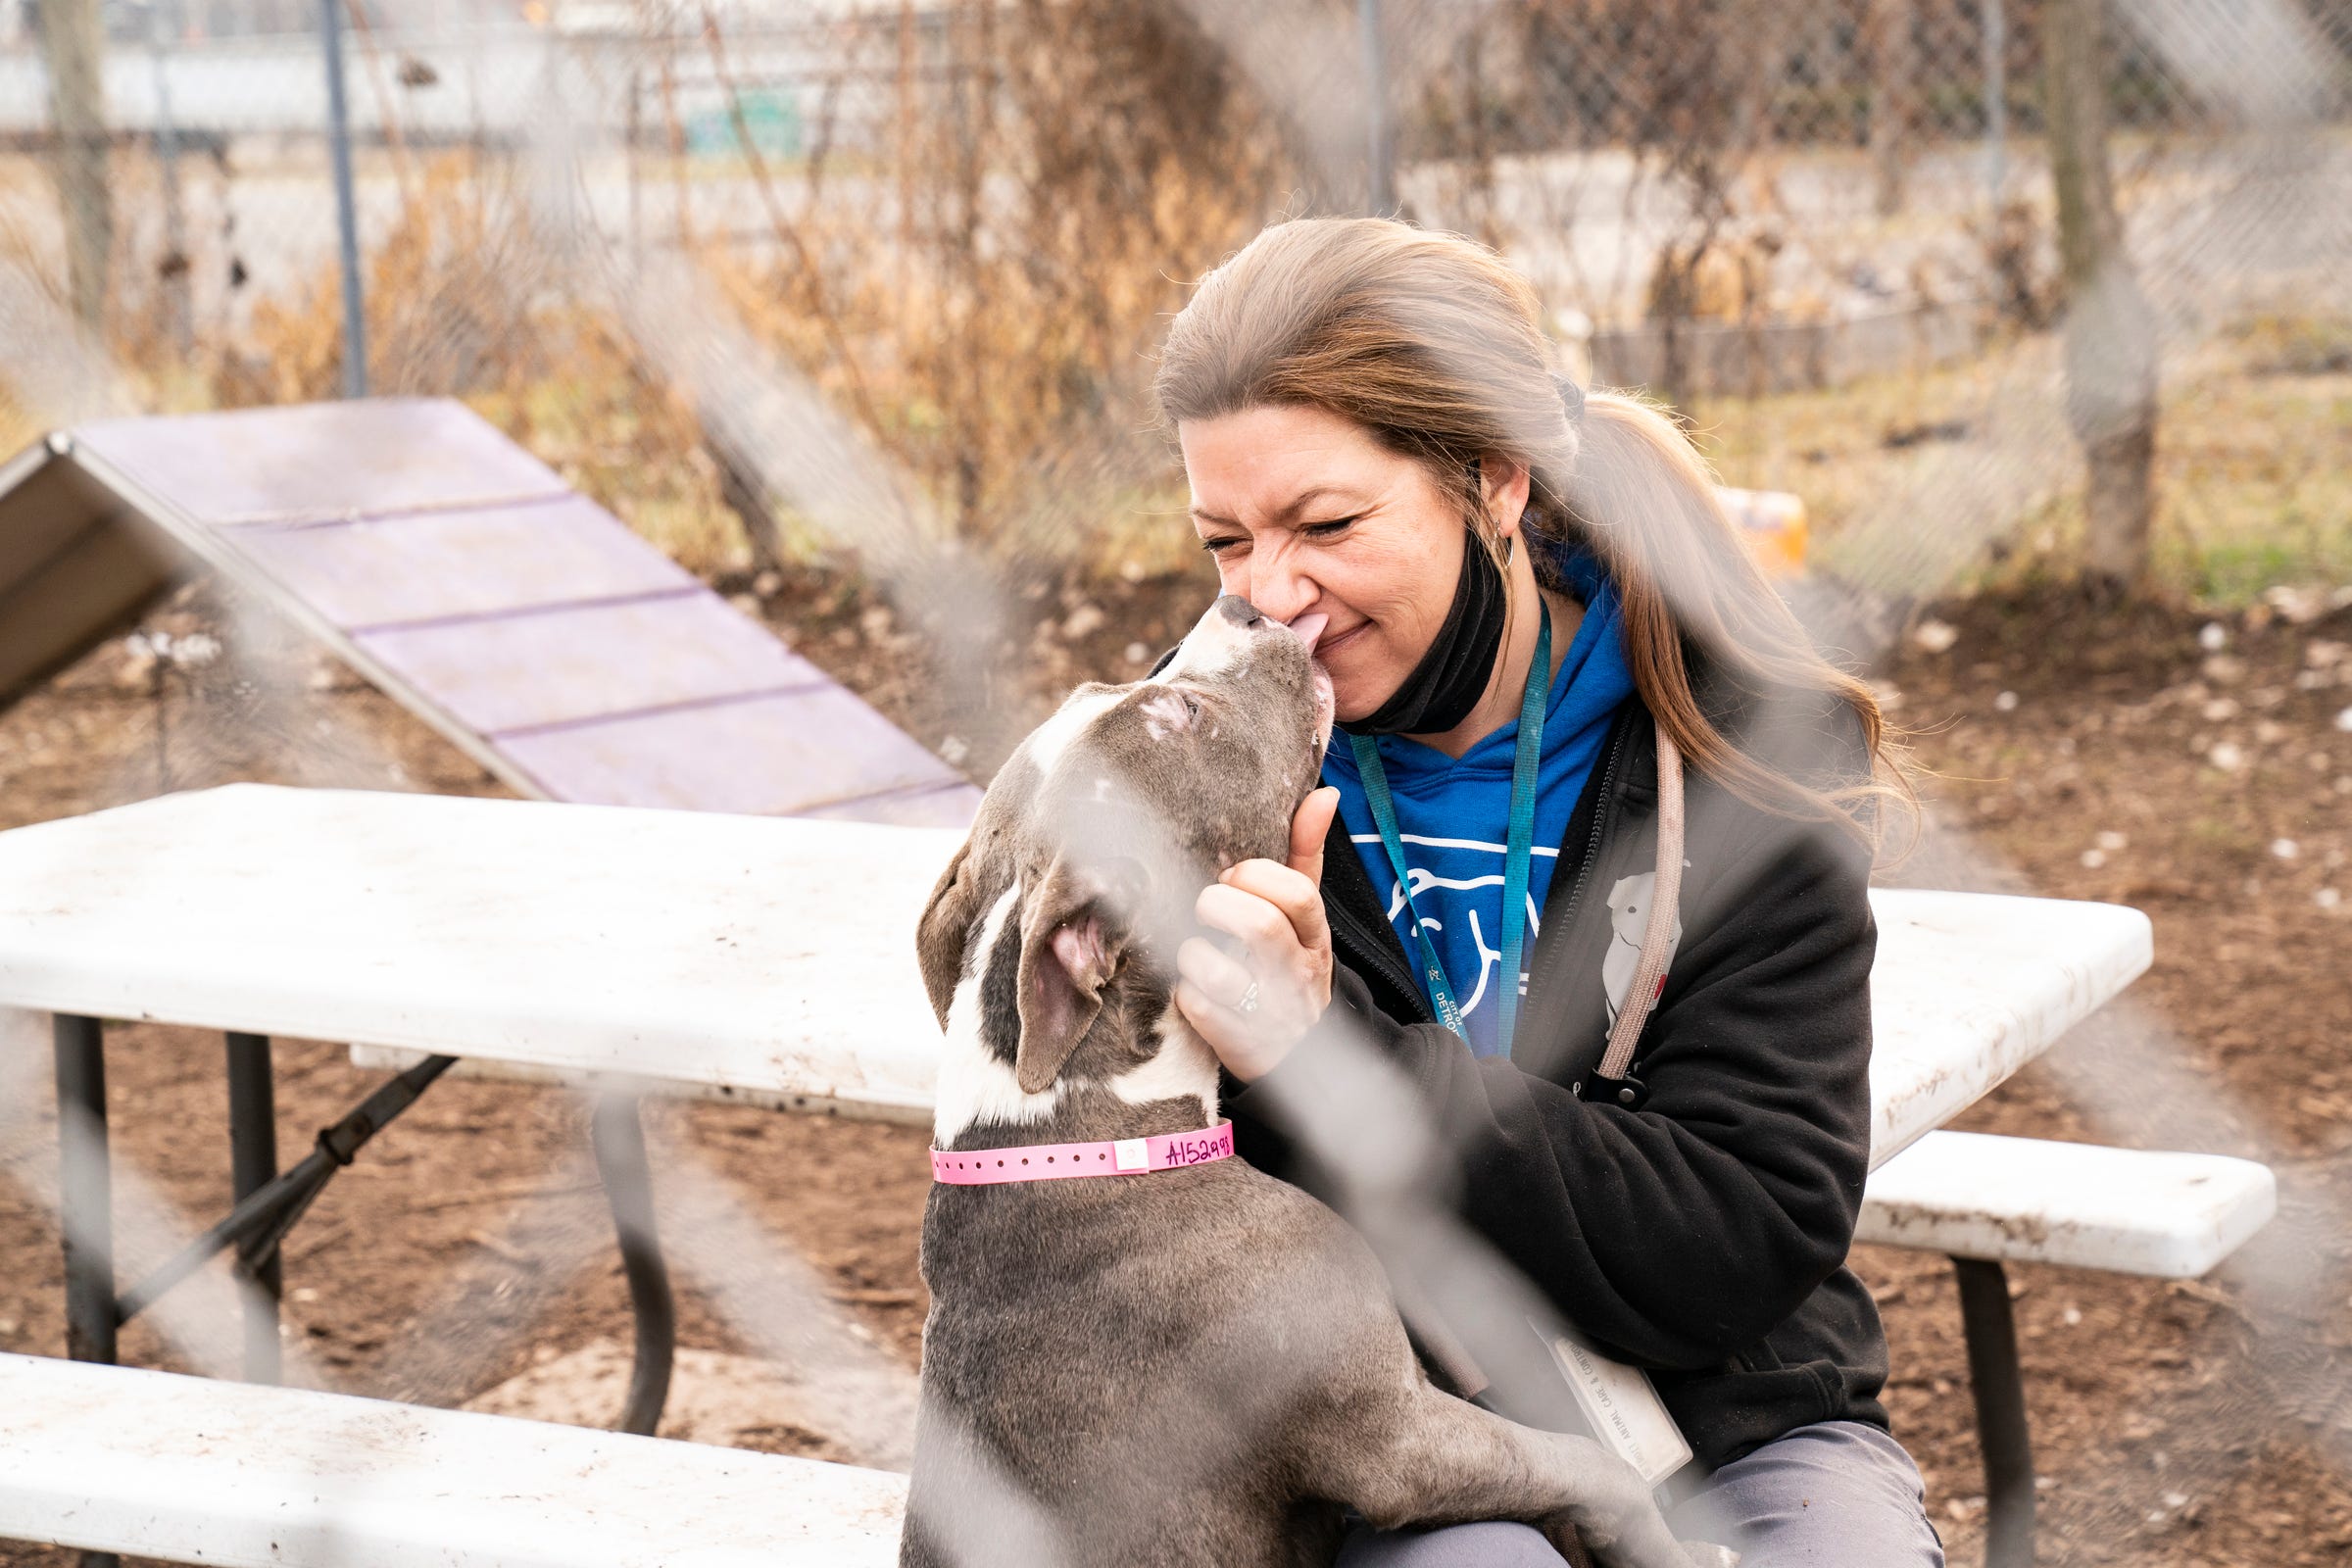 Vet needed at Detroit animal shelter, volunteers call for help